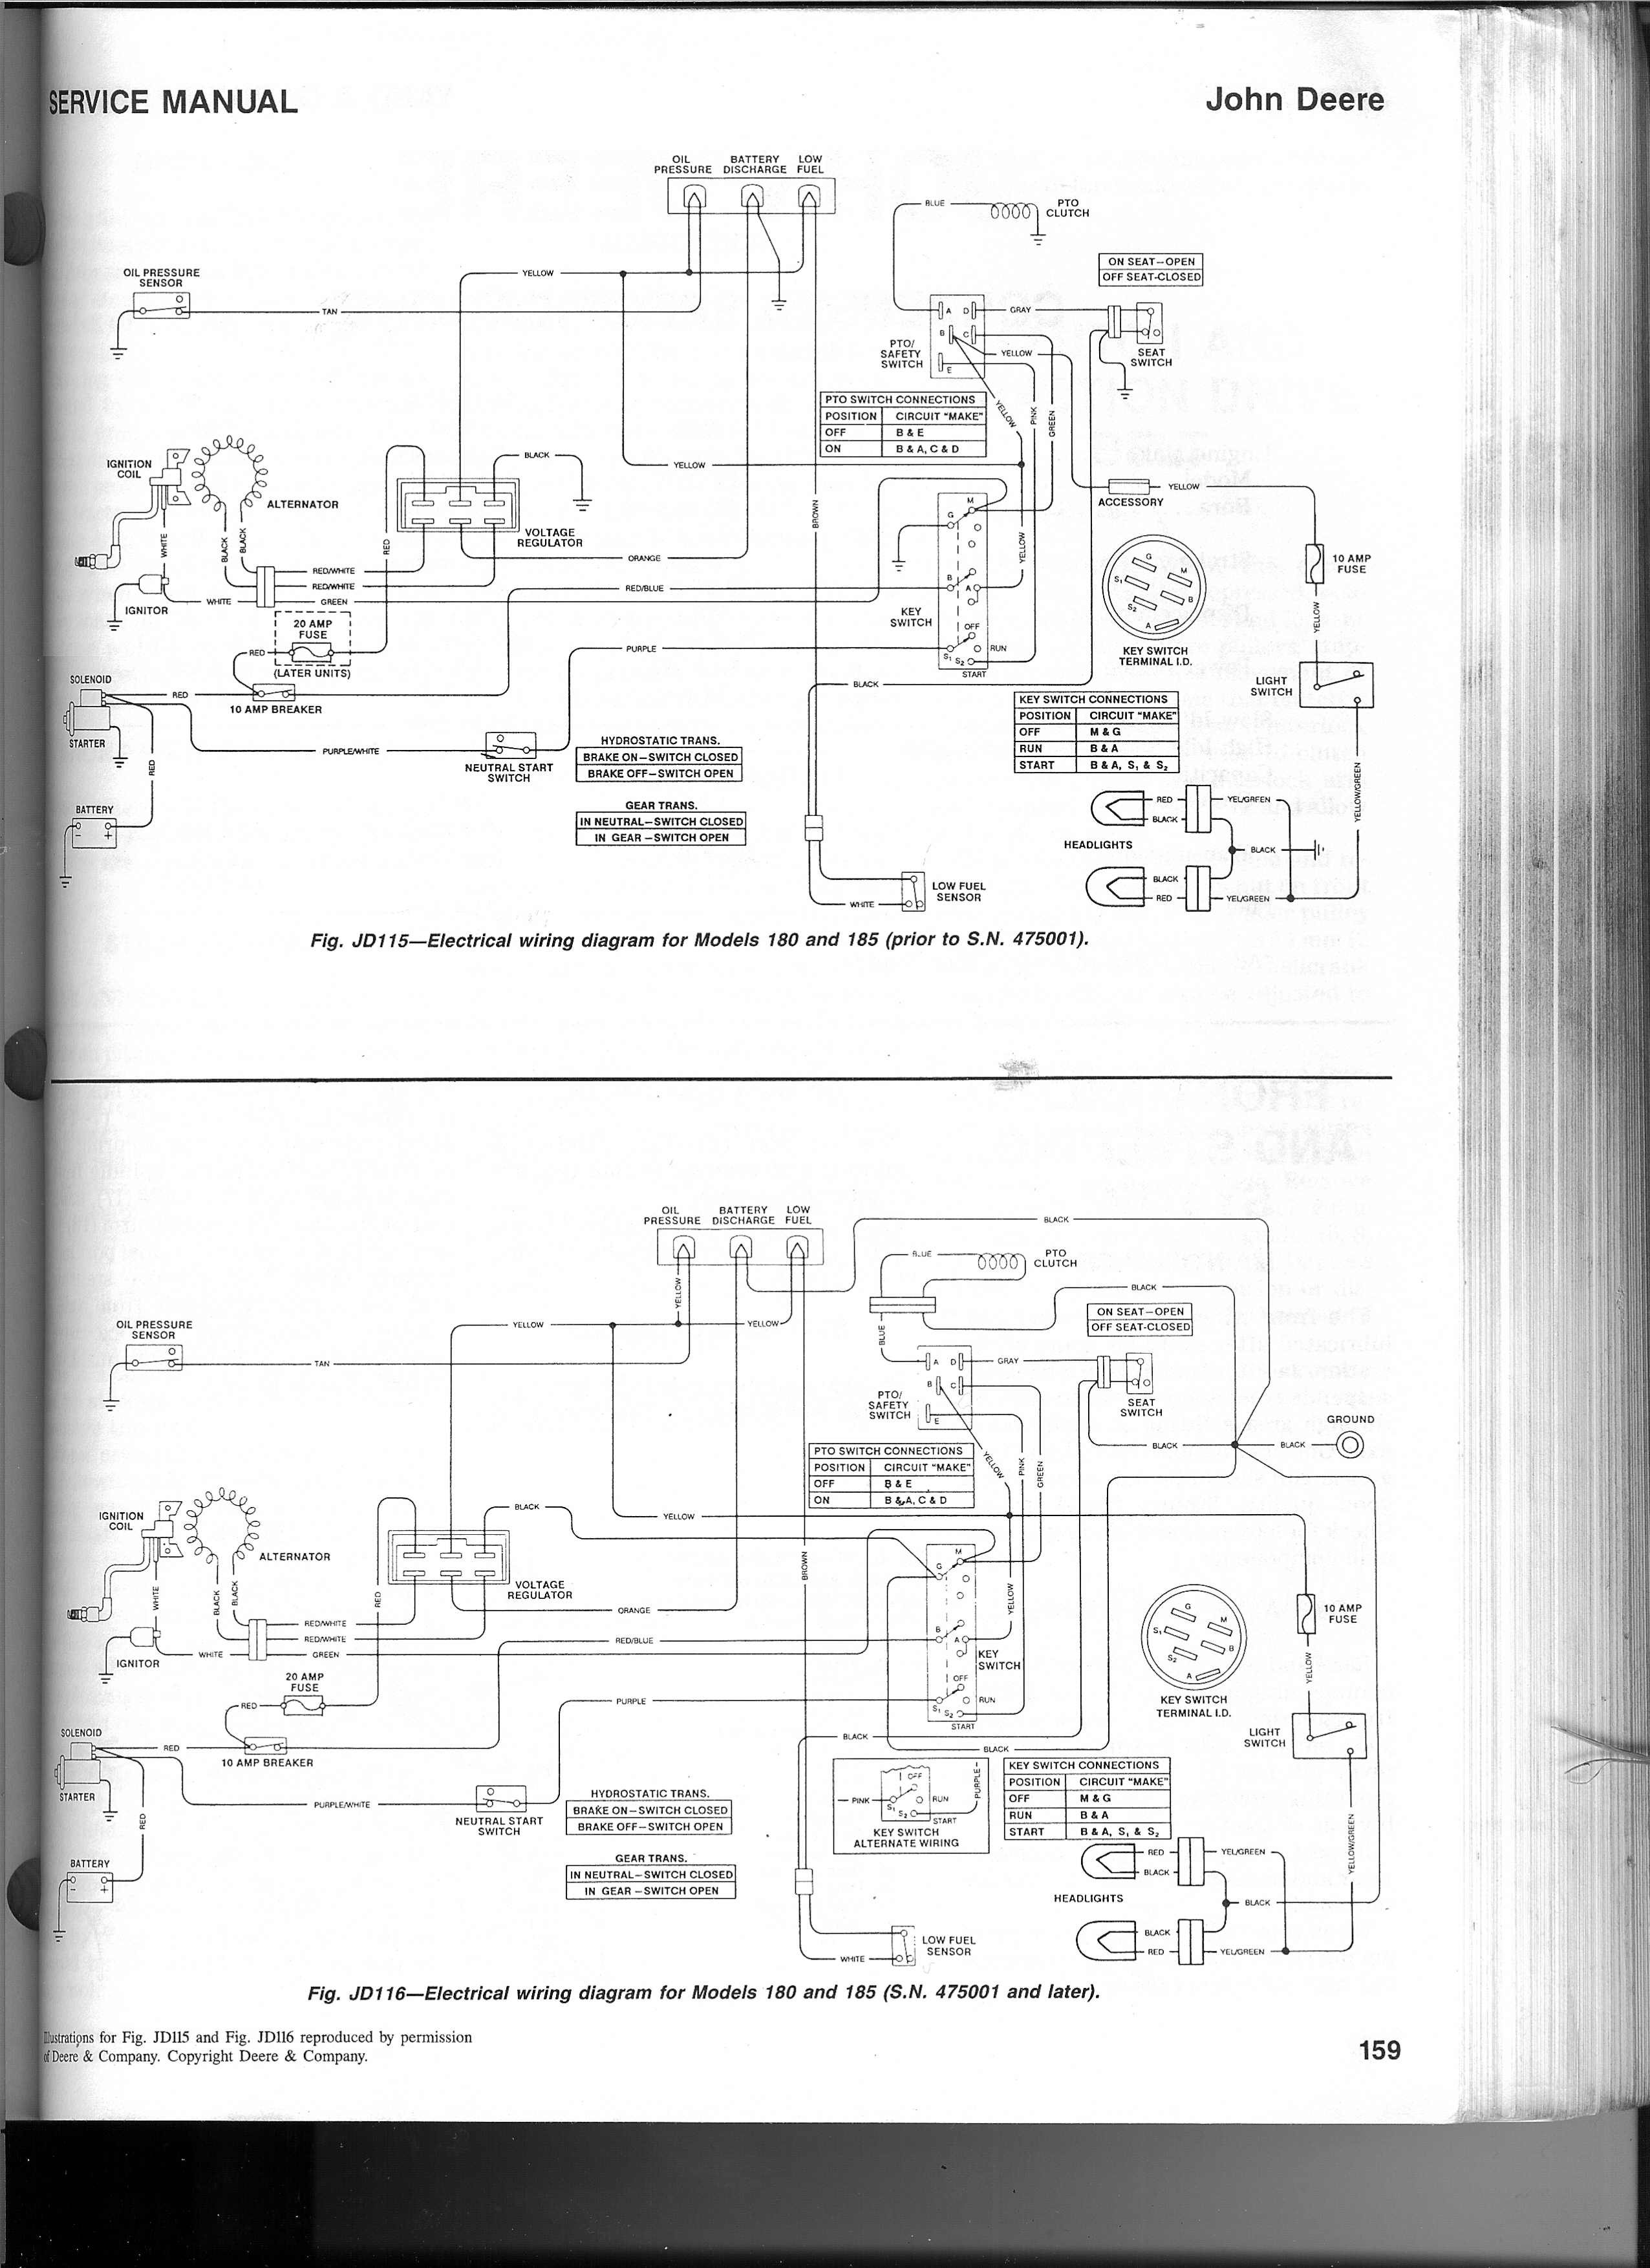 Jd 345 Wiring Diagram Dh 6213] John Deere Gt235 Wiring Diagram for Free Further Of Jd 345 Wiring Diagram